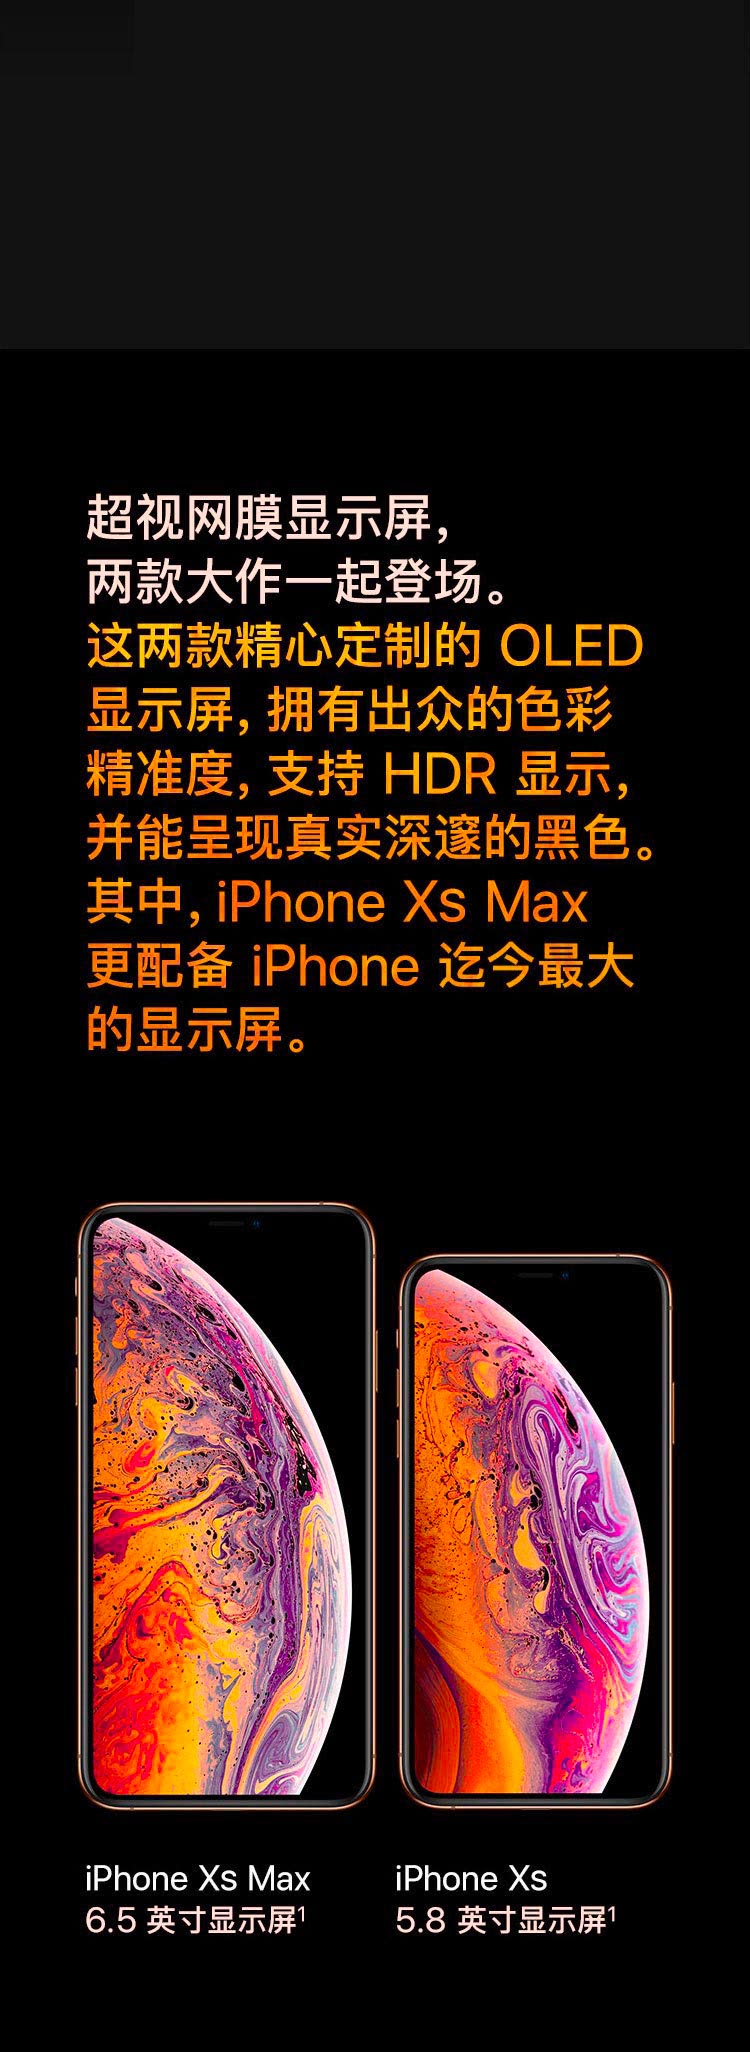 Apple iPhone XS Max (A2103) 256GB 金色 全